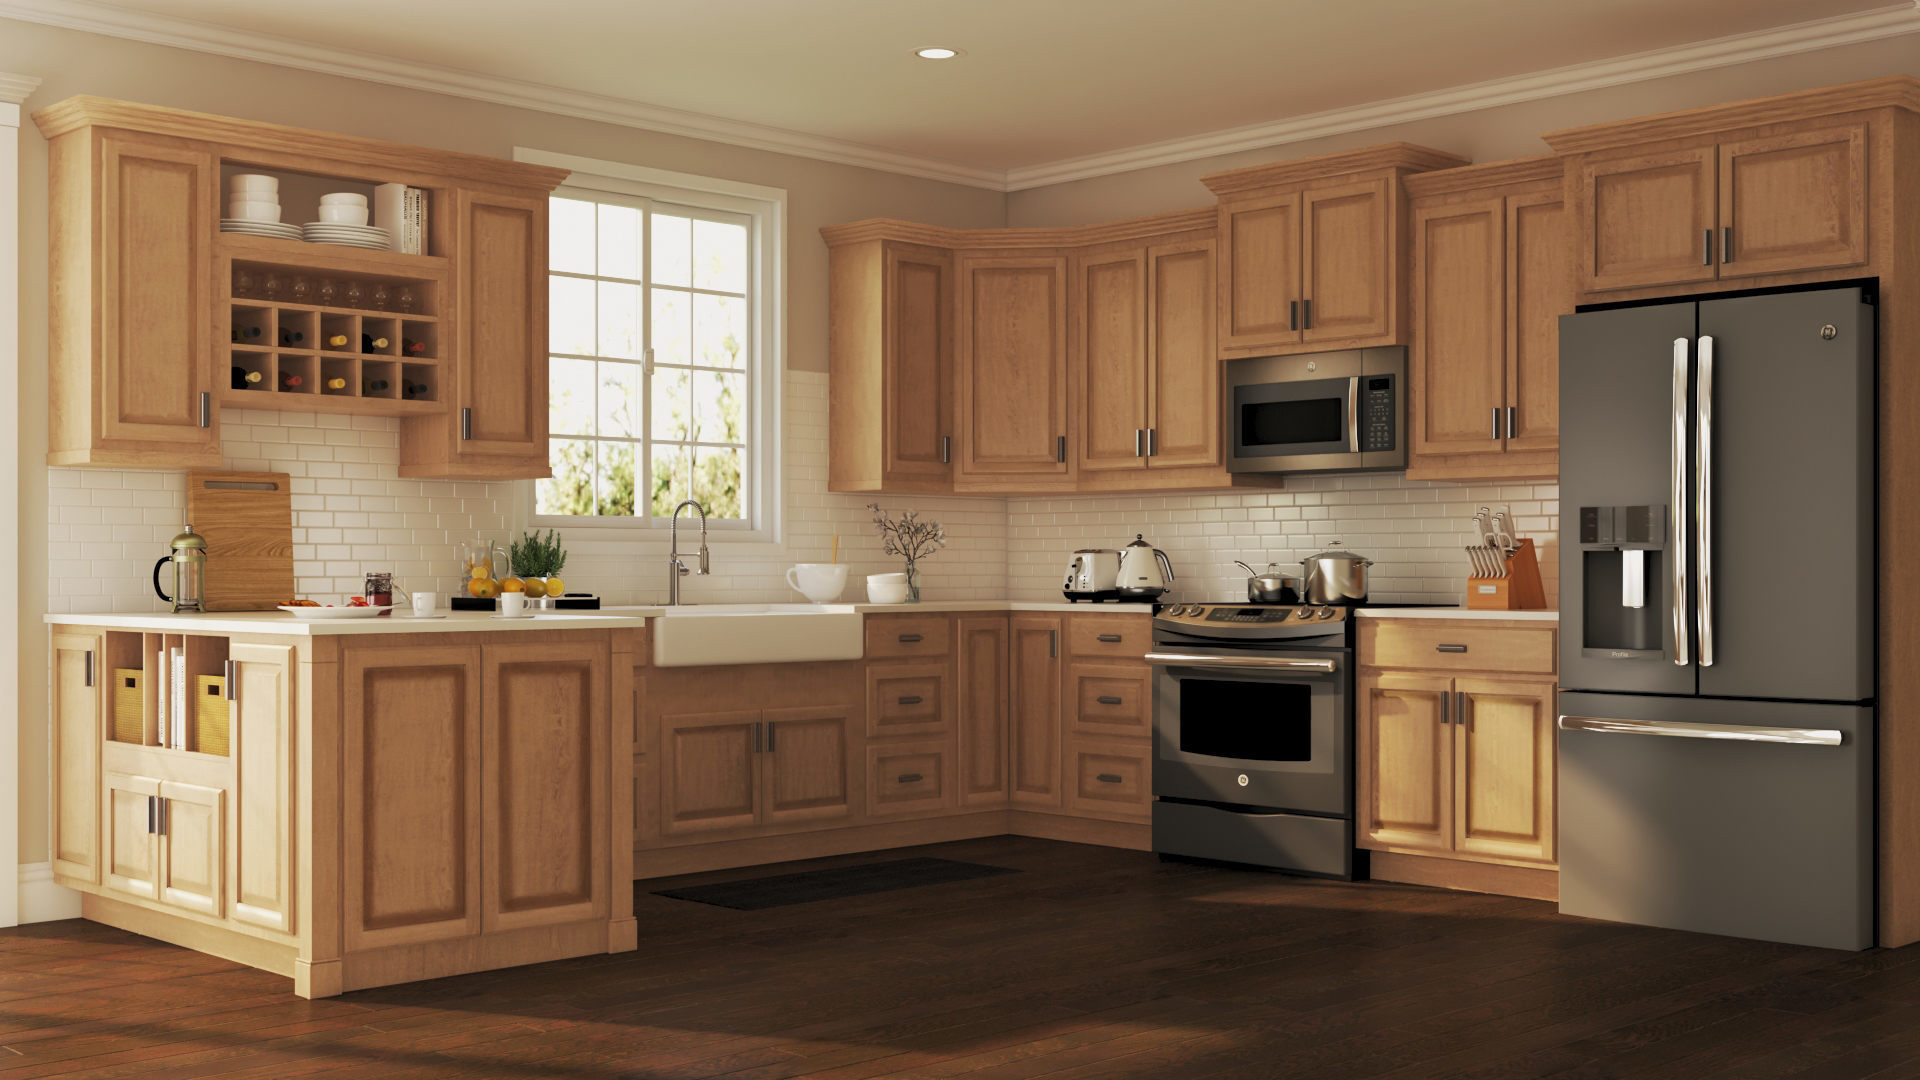 Home Depot Kitchen Cabinet Paint
 Hampton Wall Kitchen Cabinets in Medium Oak – Kitchen